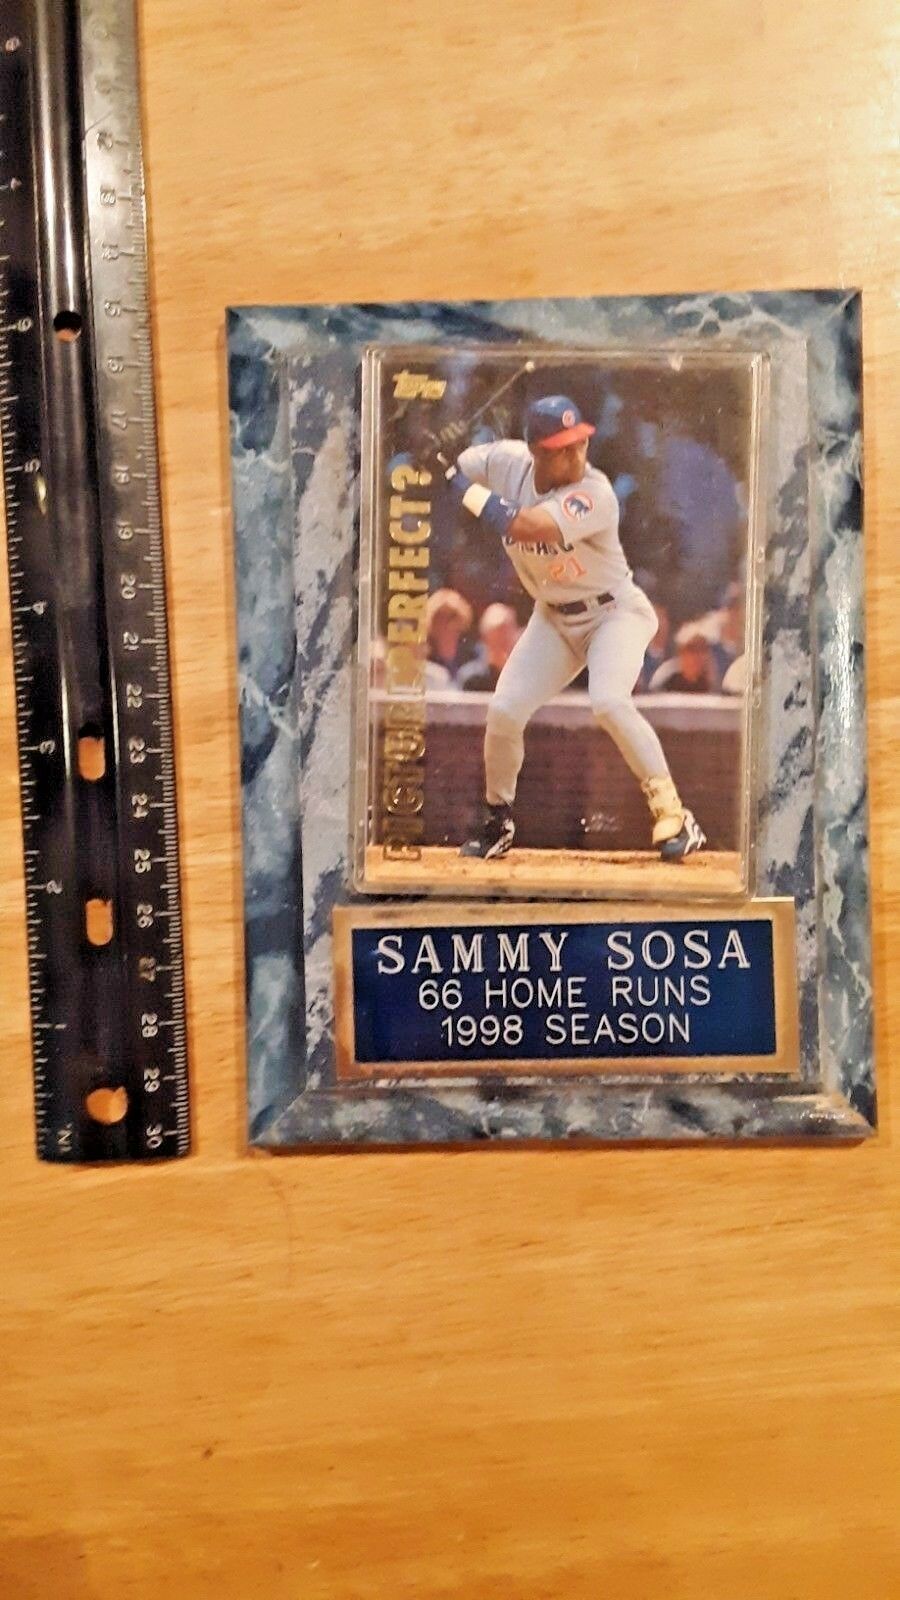 Primary image for sammy sosa 66 home runs 1998 season baseball plaque